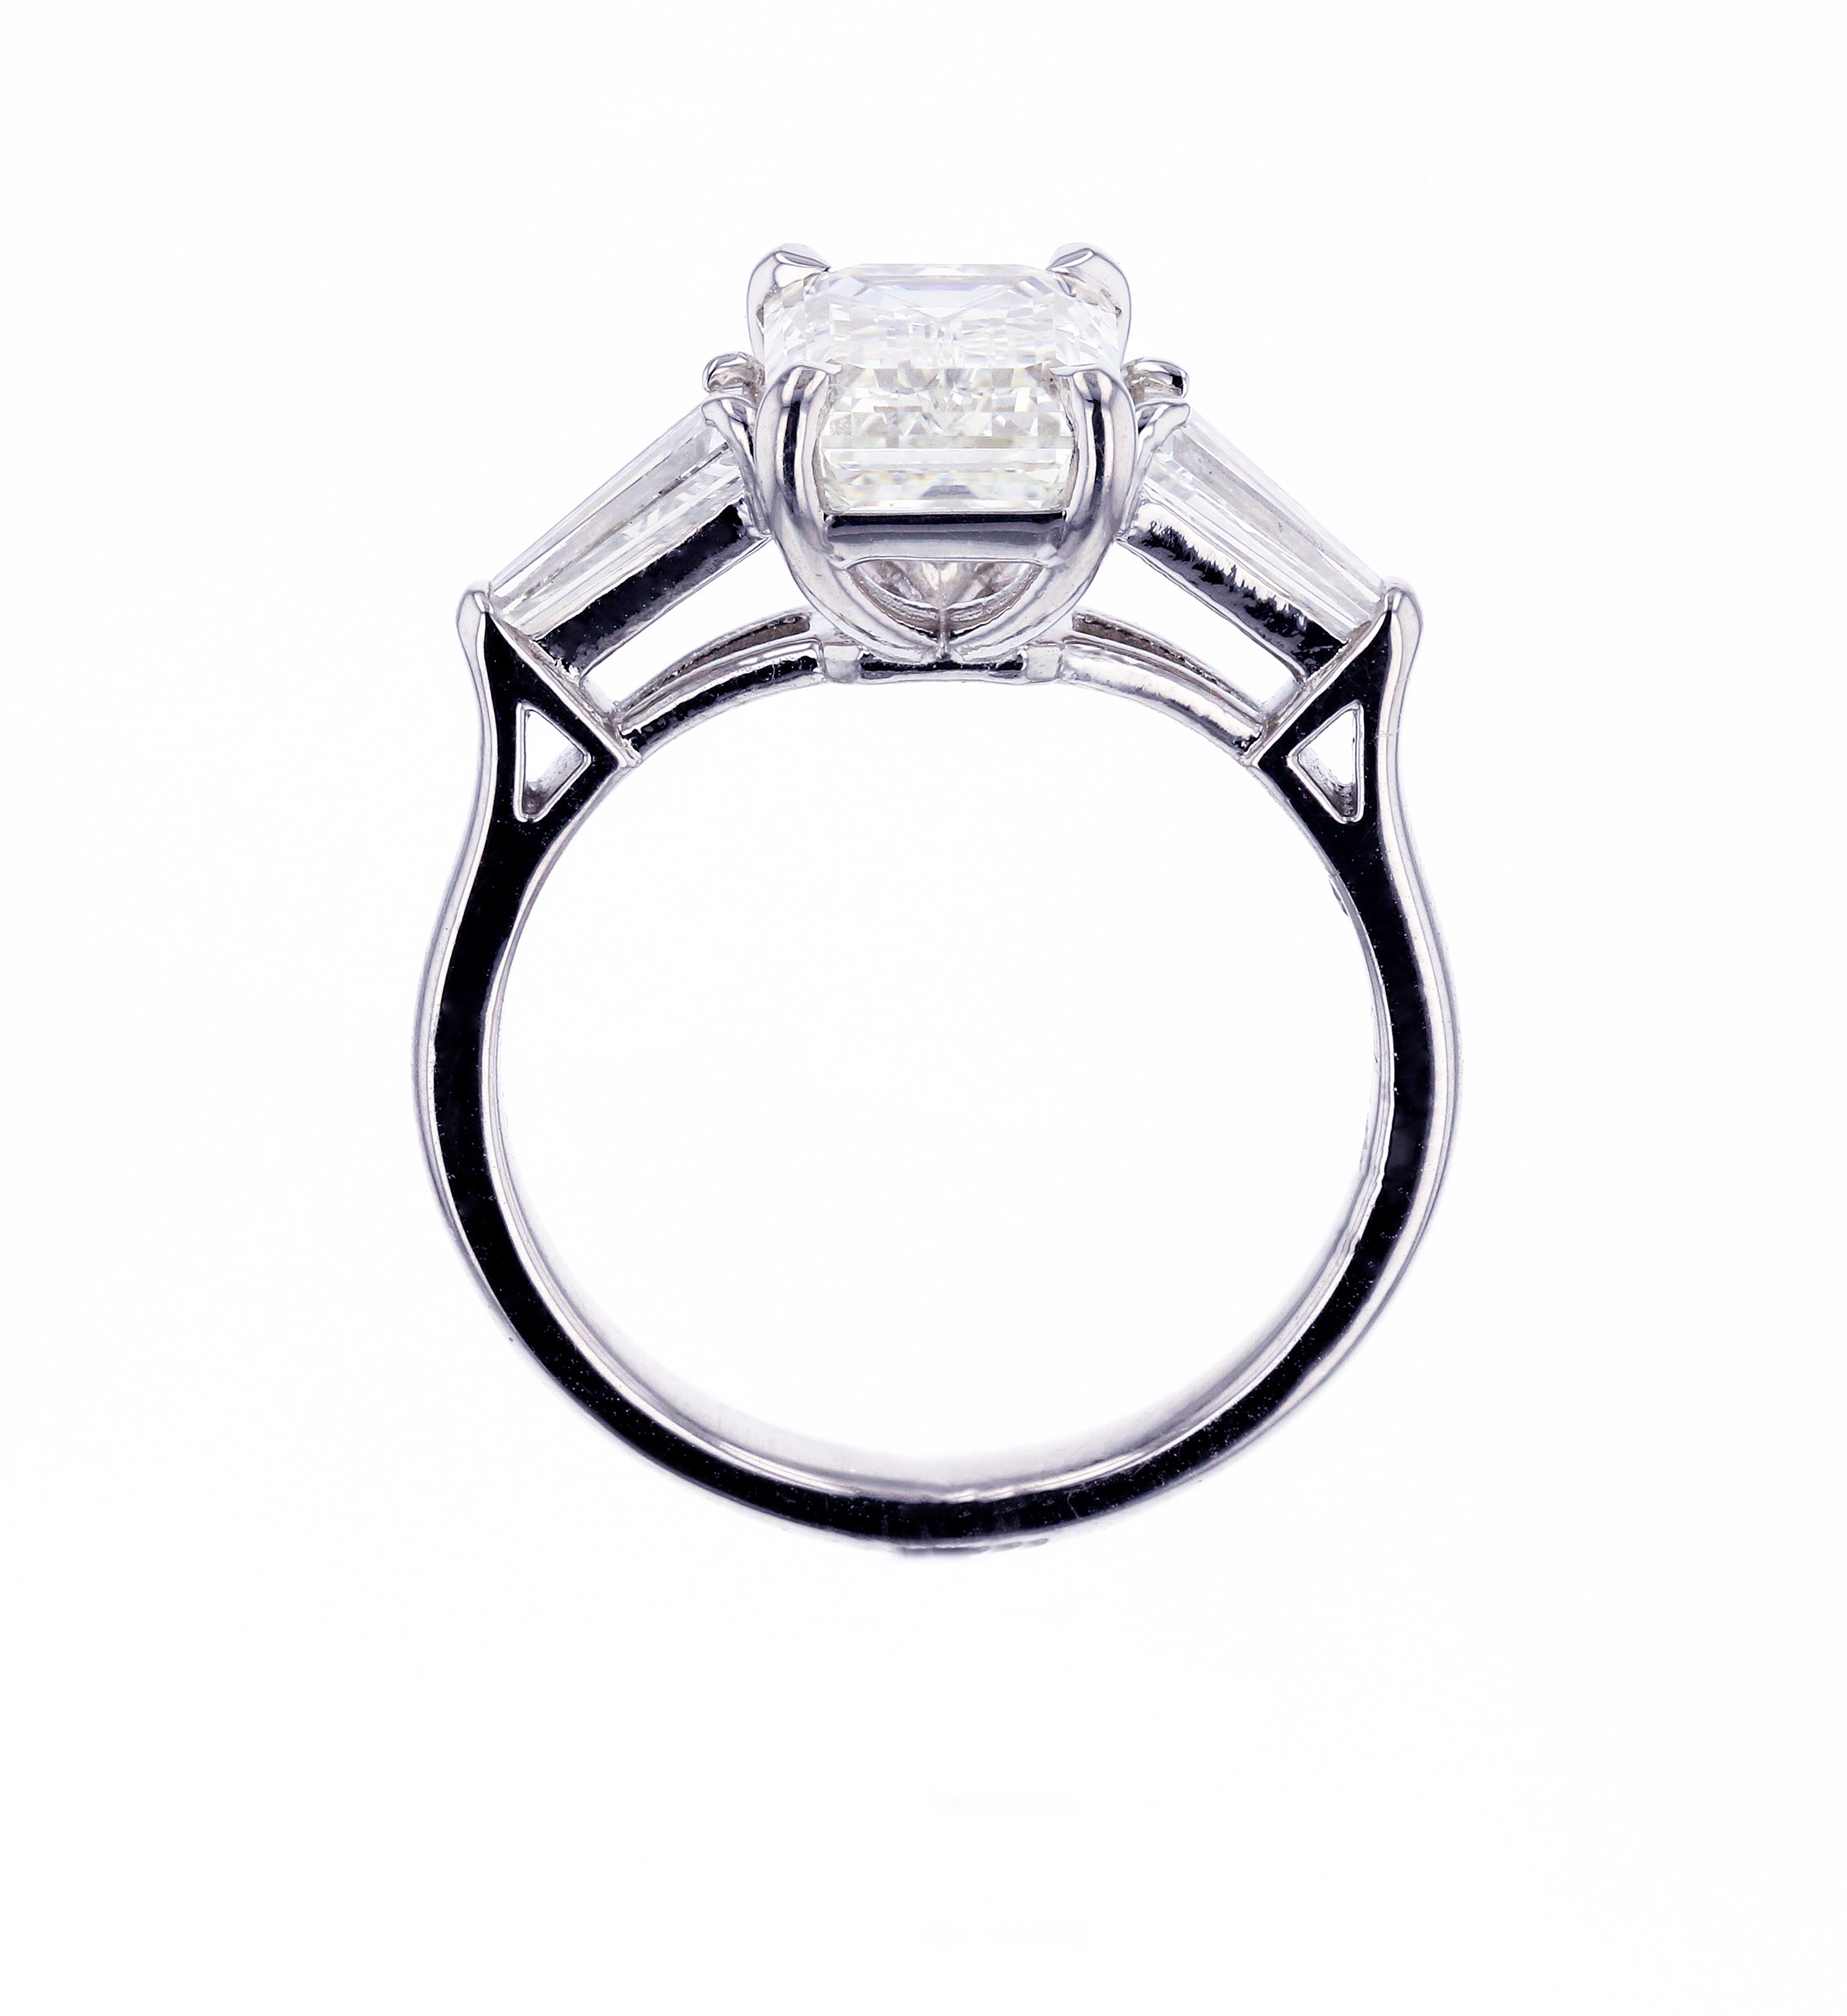 Three-stone Emerald Engagement Ring